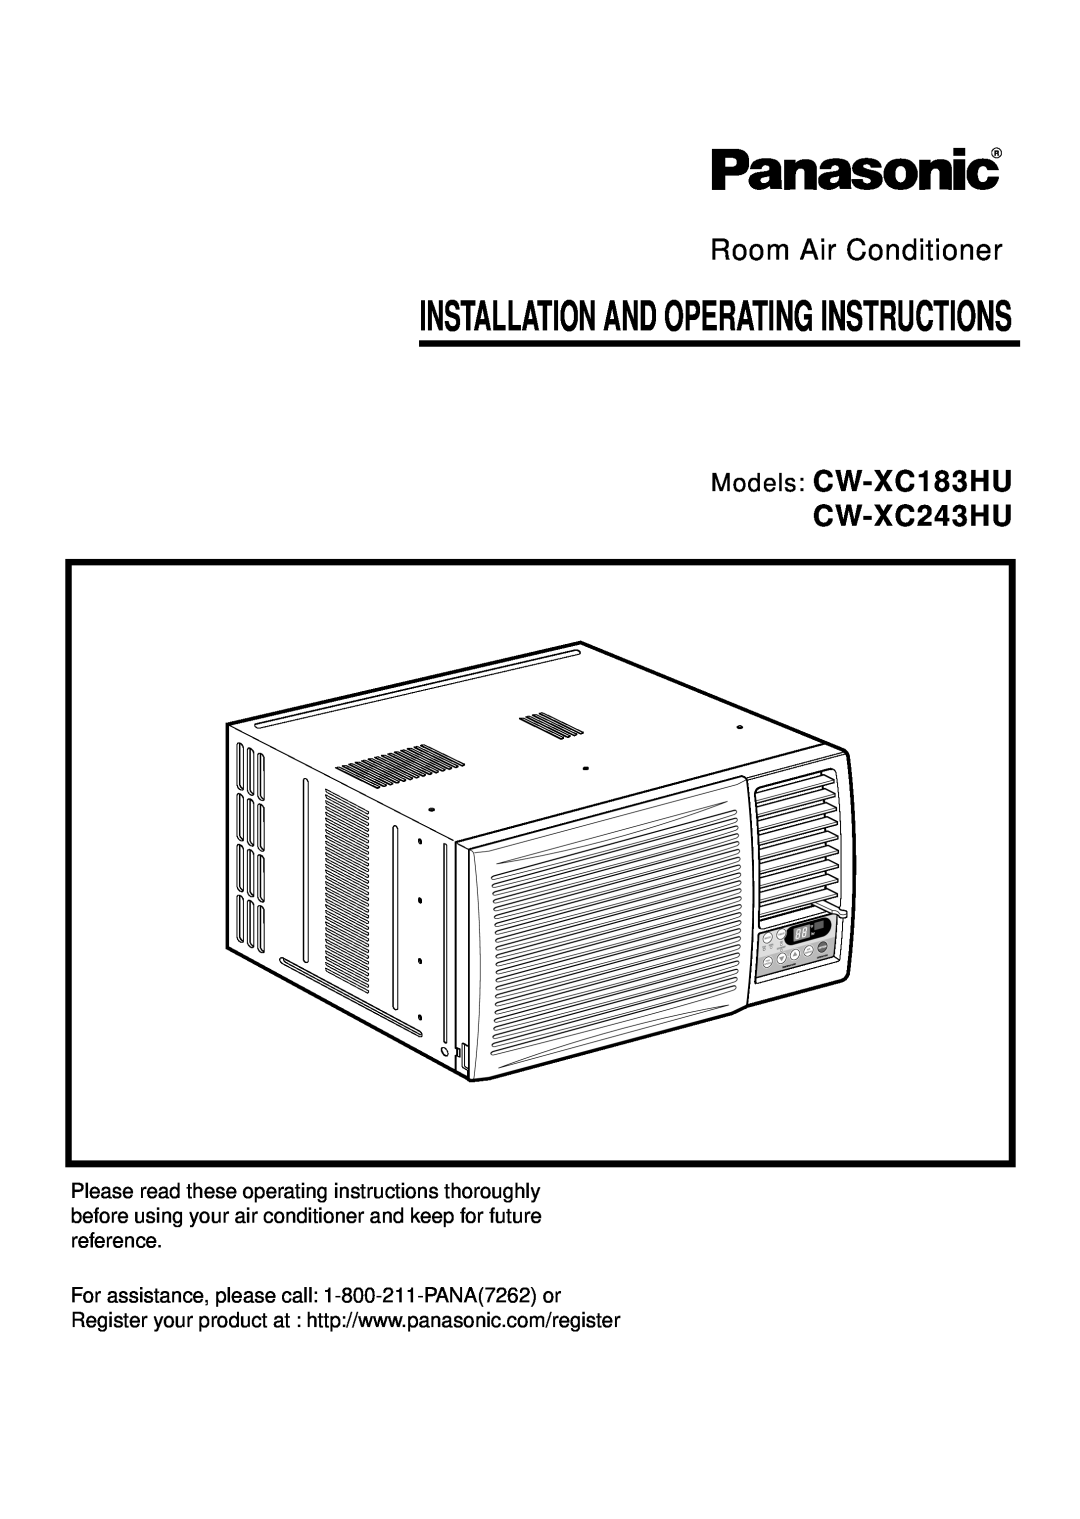 Panasonic manual Models: CW-XC183HU CW-XC243HU, Installation And Operating Instructions, Room Air Conditioner 